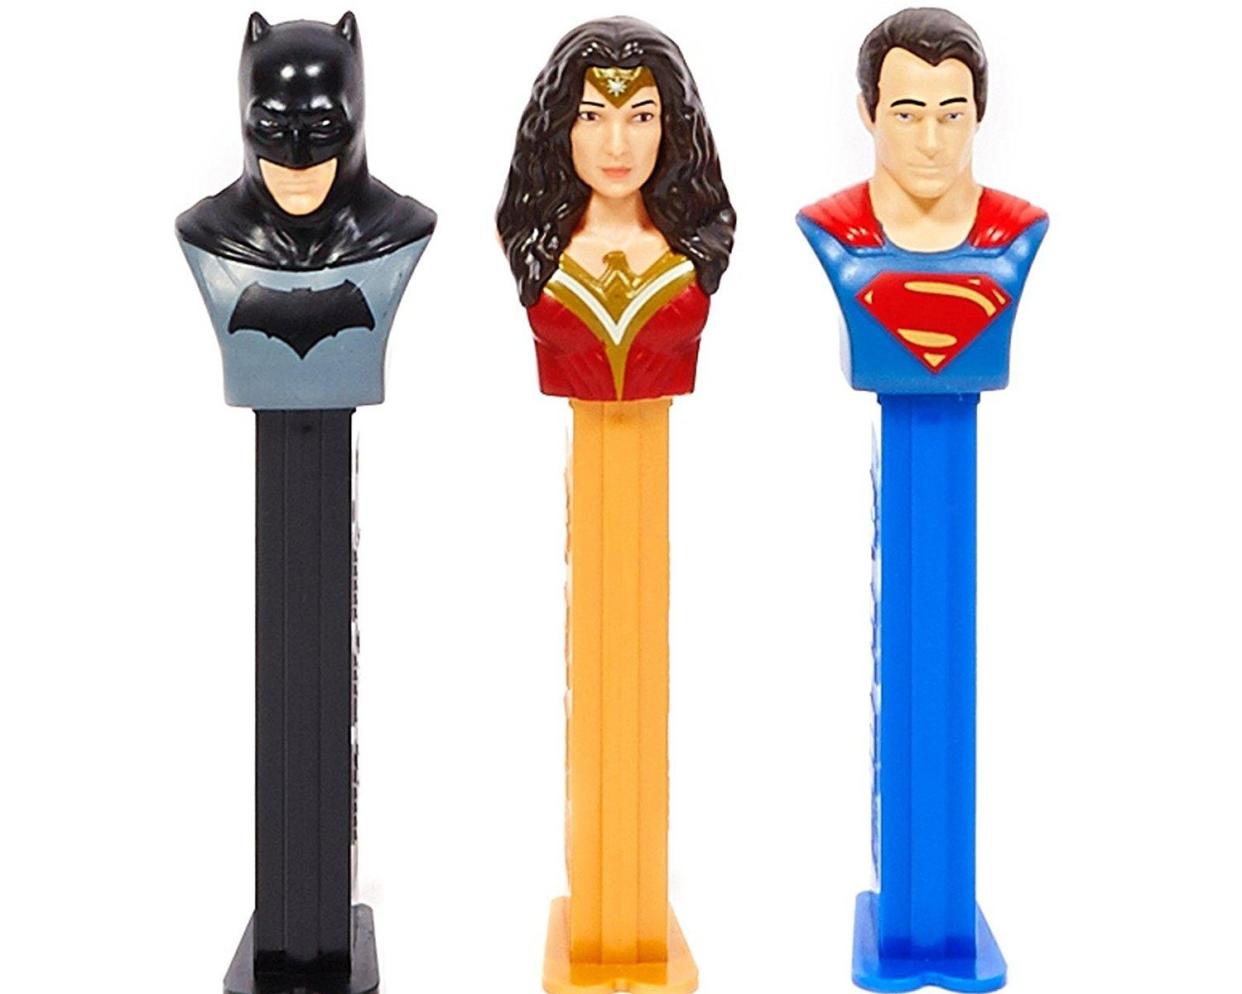 Batman, Wonder Woman, and Superman Pez dispensers